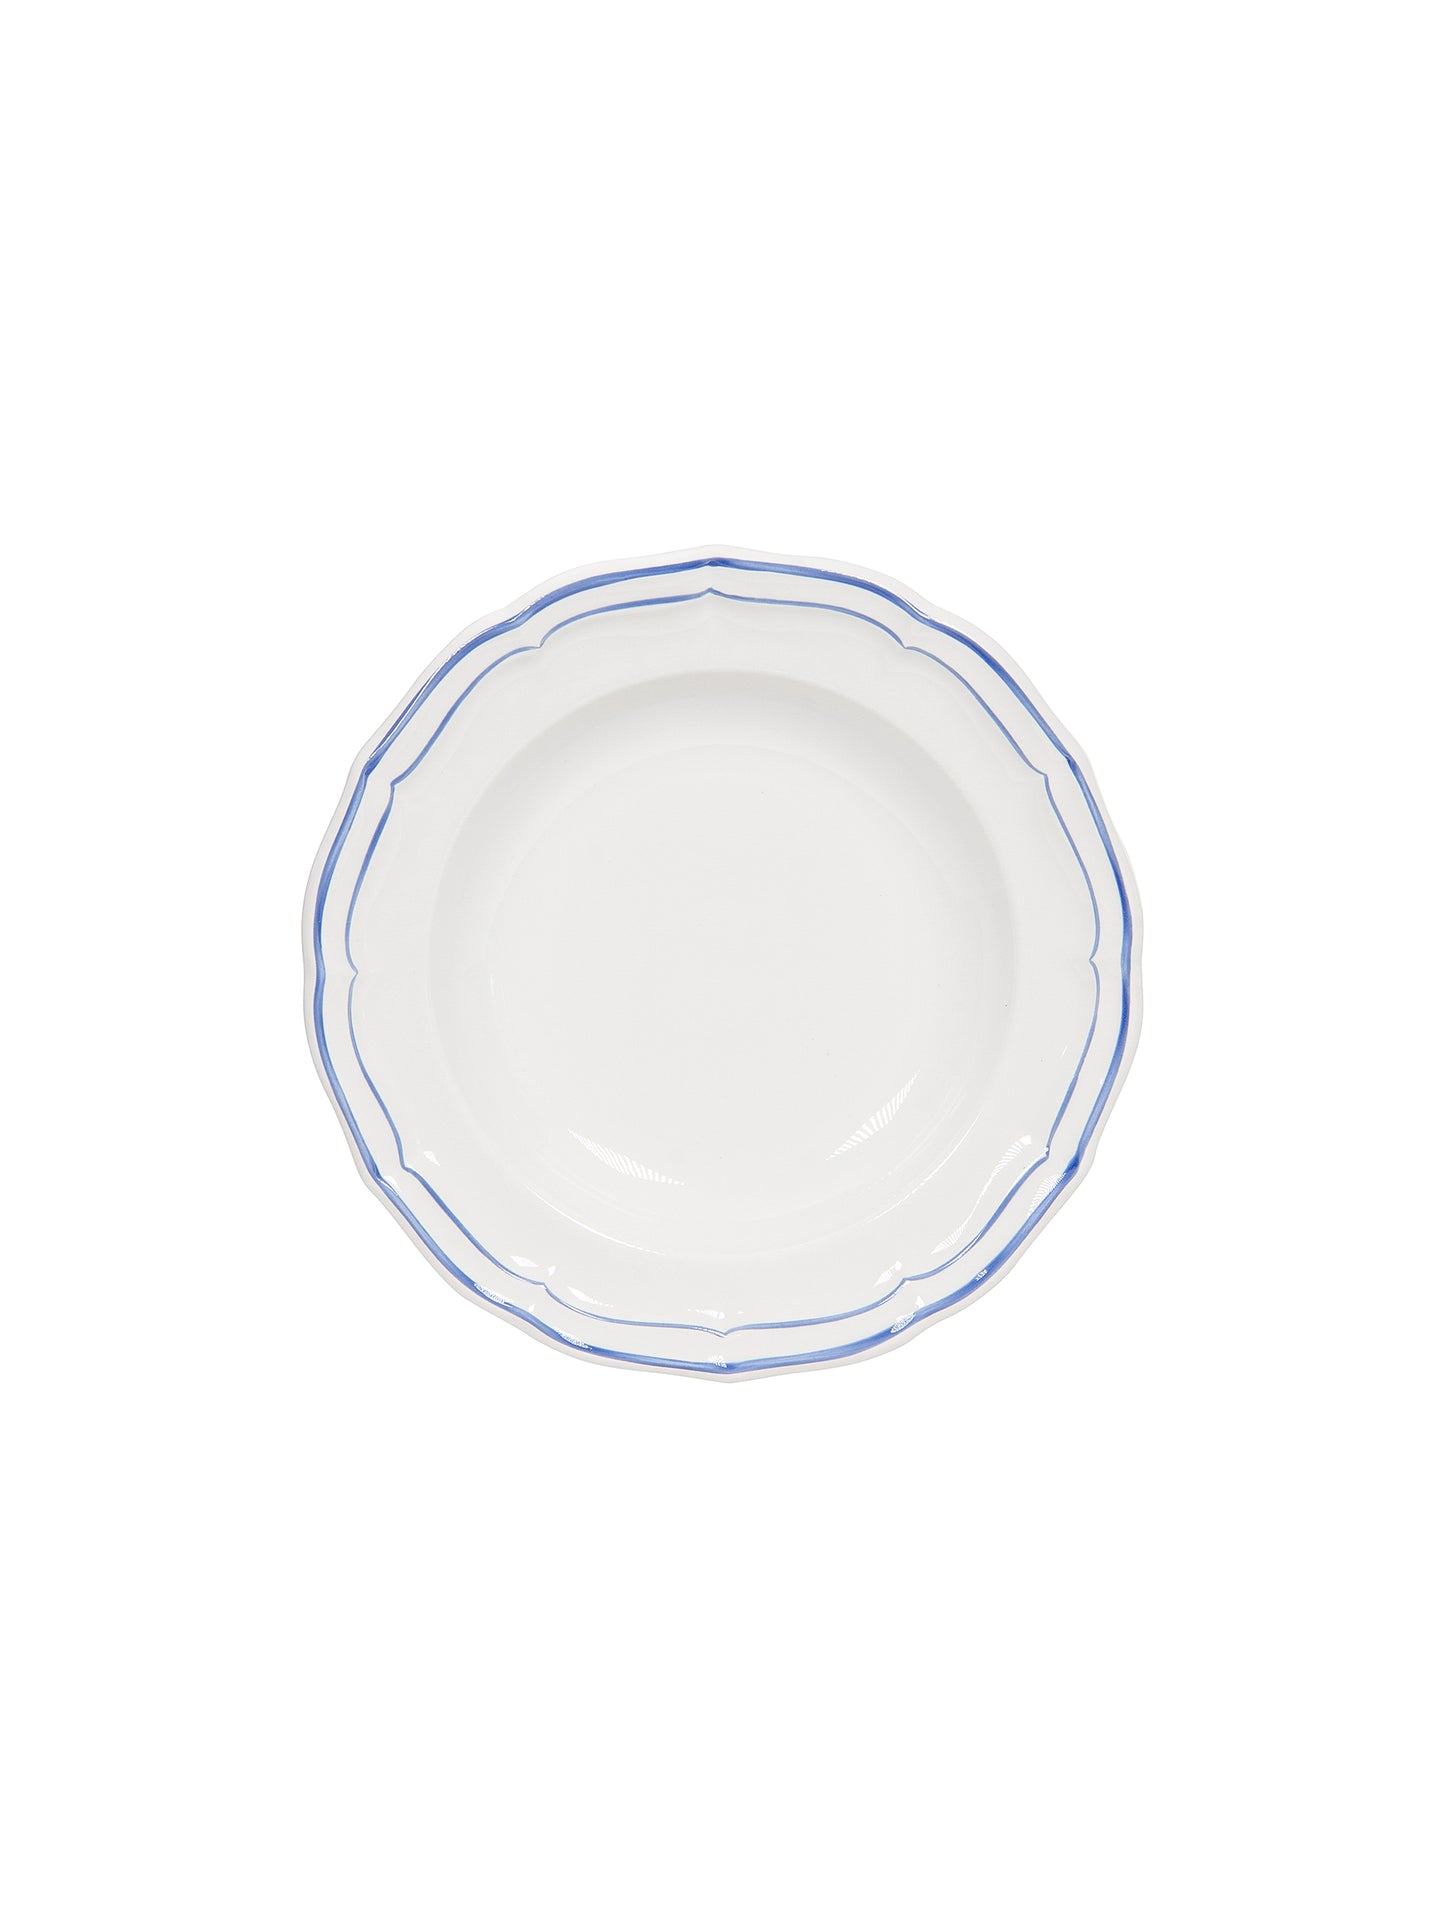 Gien Filet Bleu Soup Plate Plain Weston Table